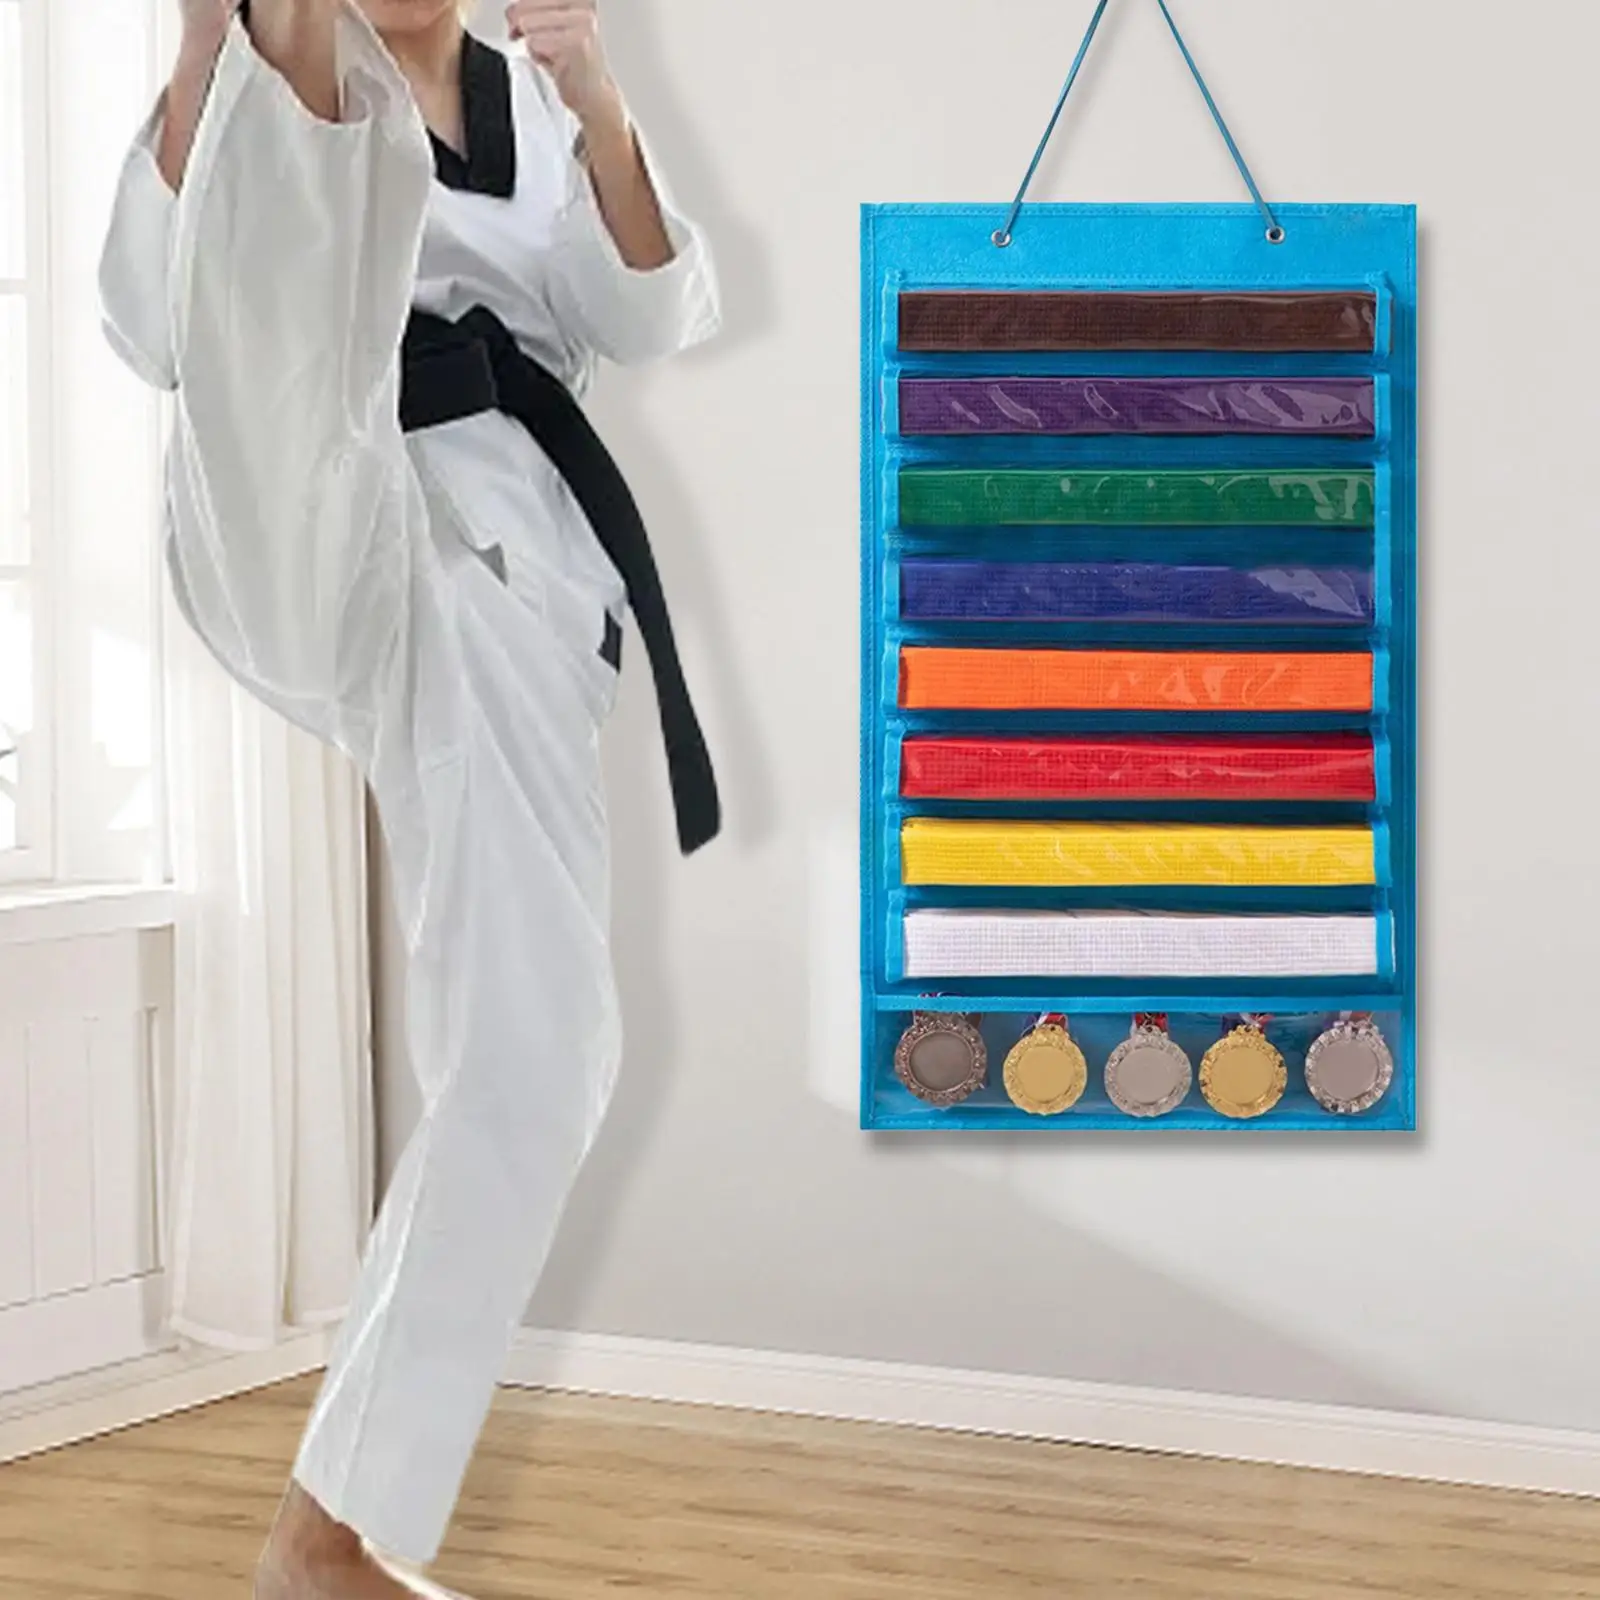 Martial Arts Belts Holder for 8 Belt Felt Karate Belt Display Rack with Dust Cover for Jiu Jitsu Boxing Judo Muay Thai